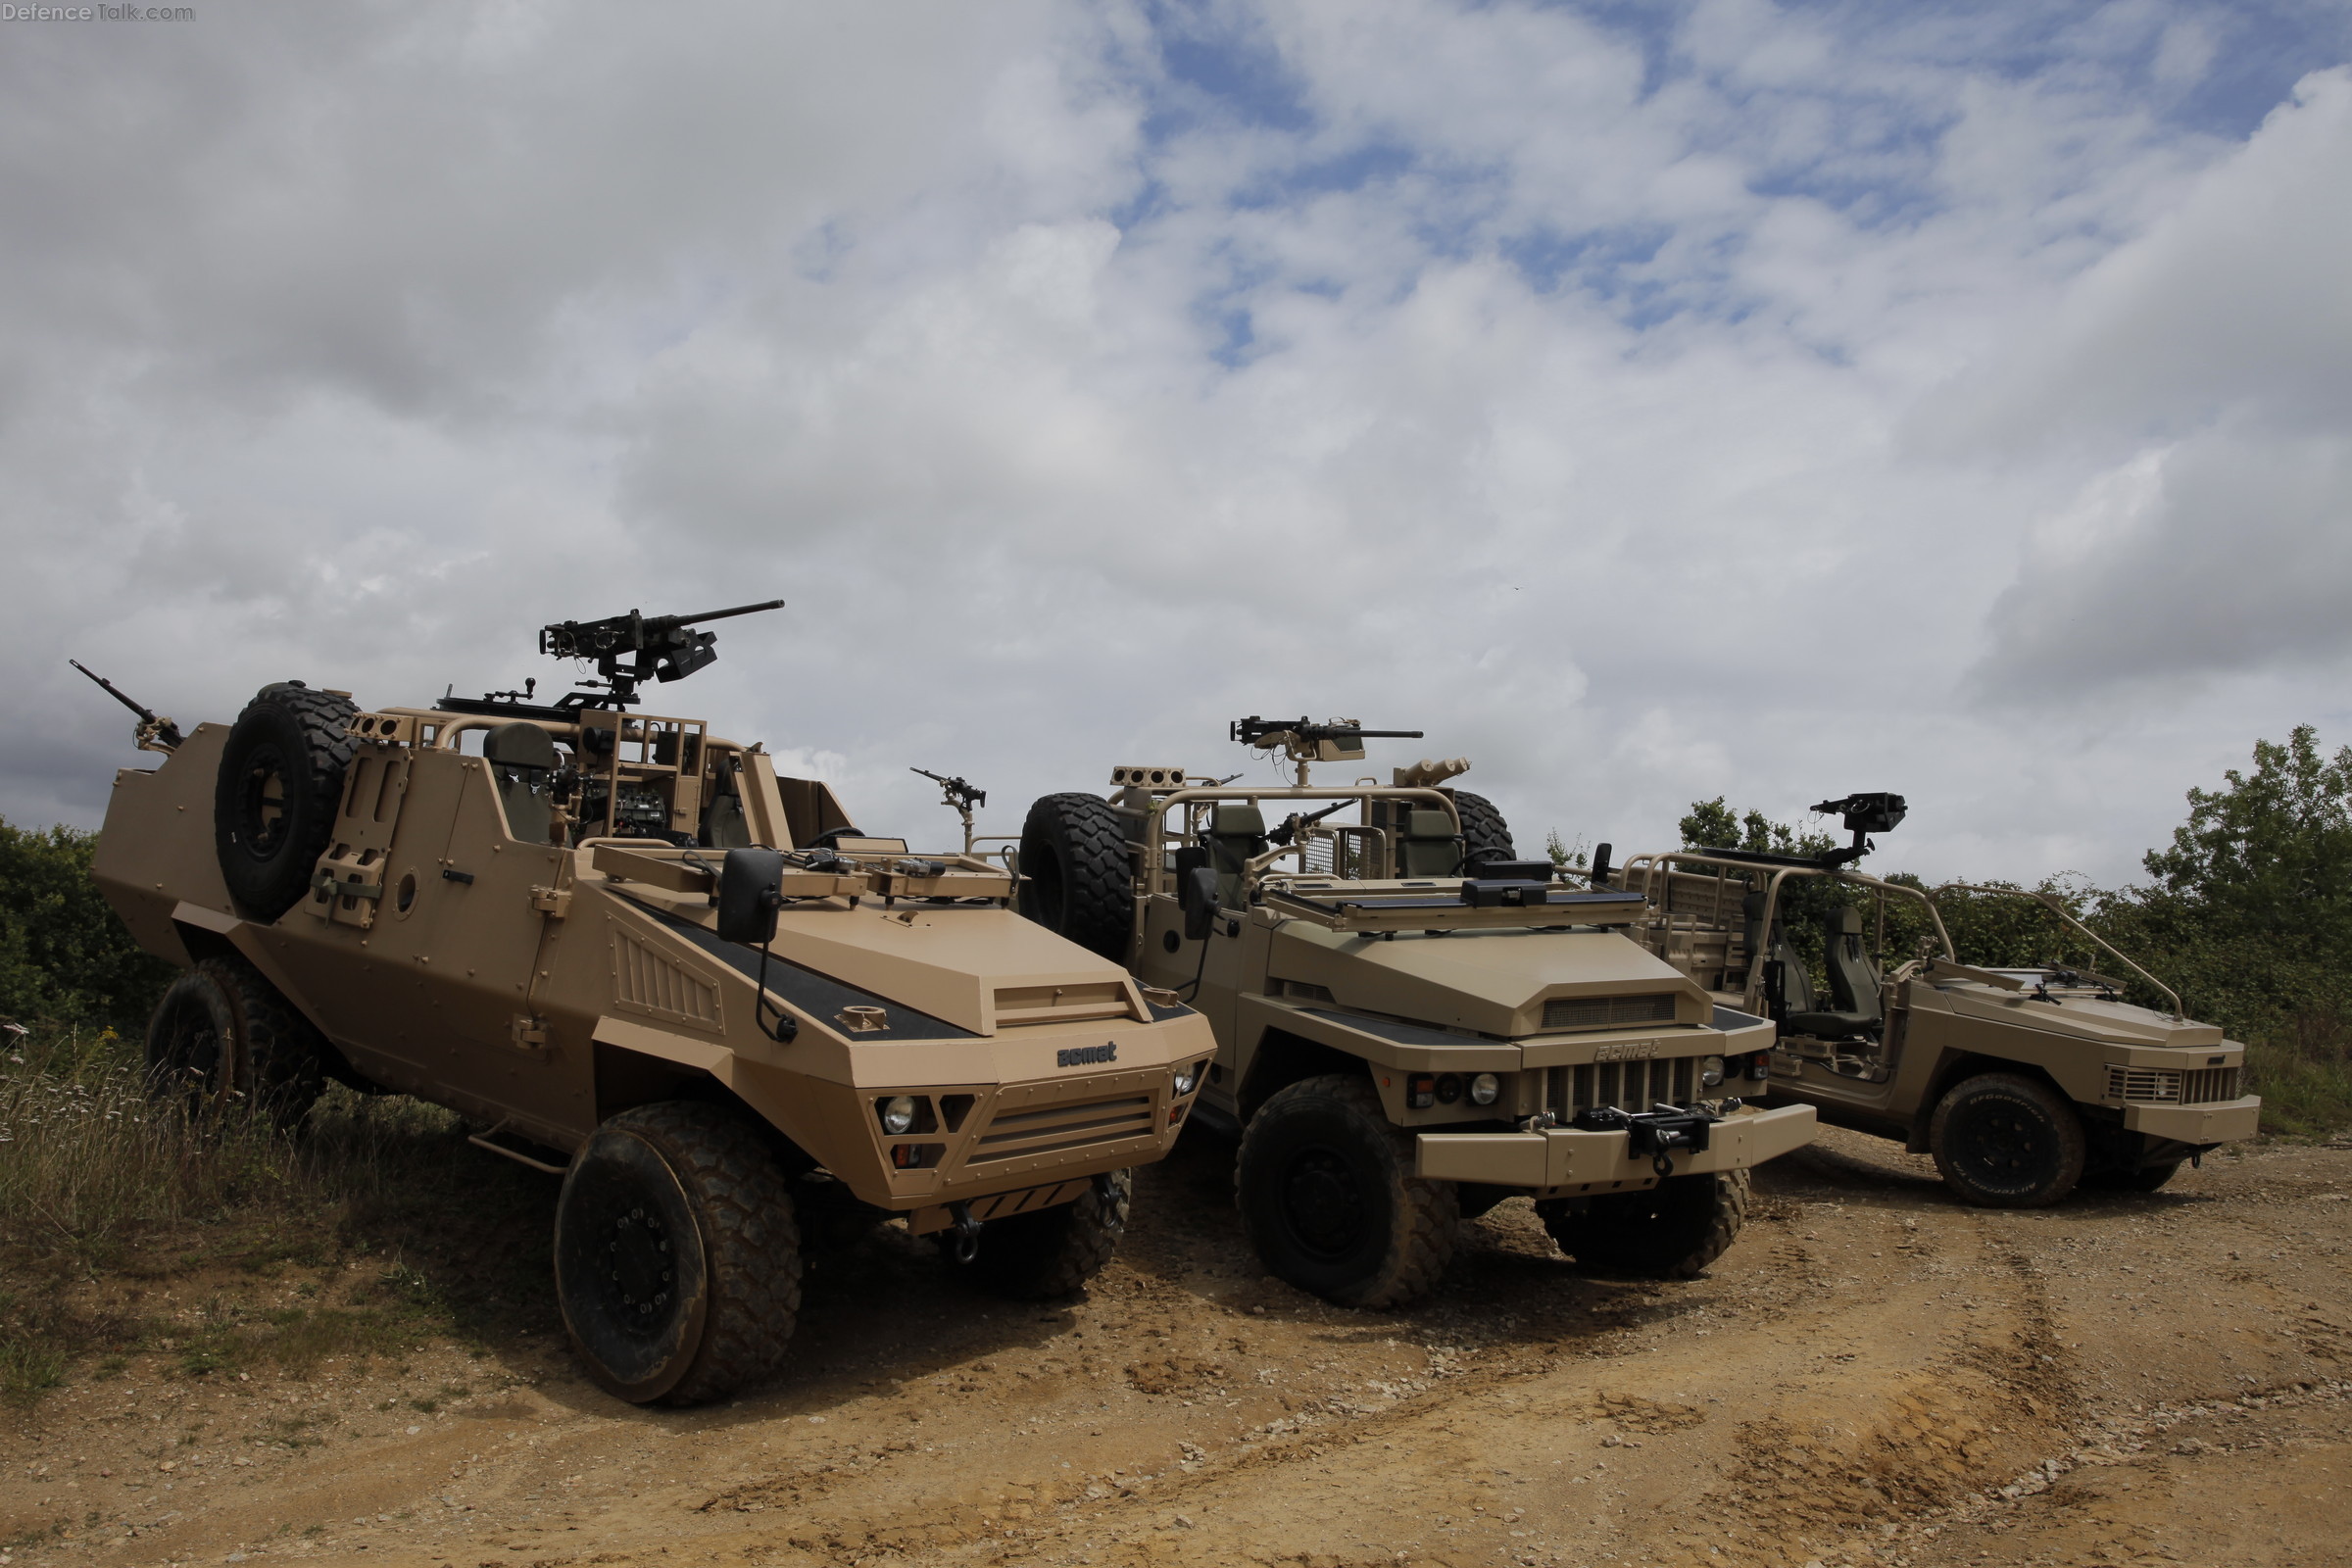 ACMAT Special Forces 4x4 vehicles